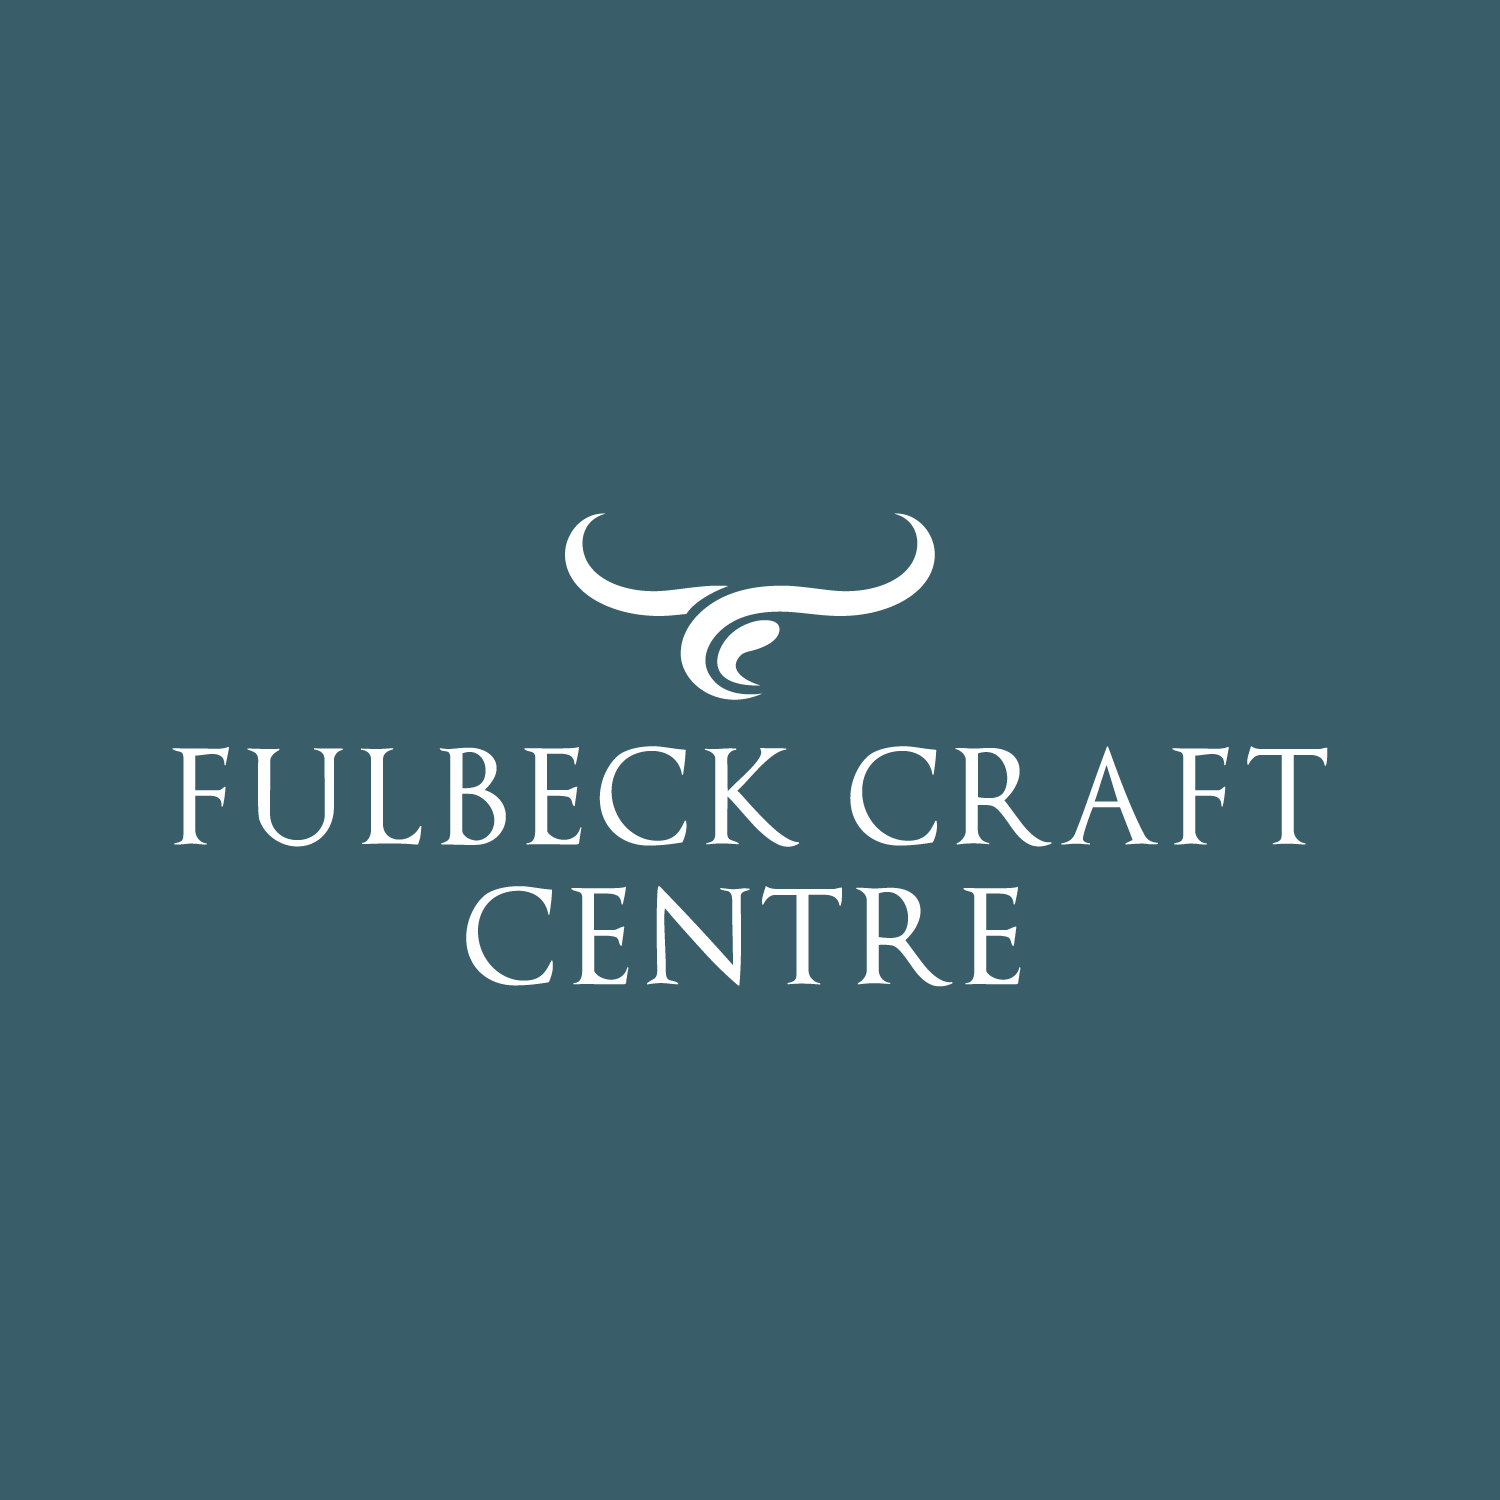 Fulbeck Craft Centre Logo and Branding Design